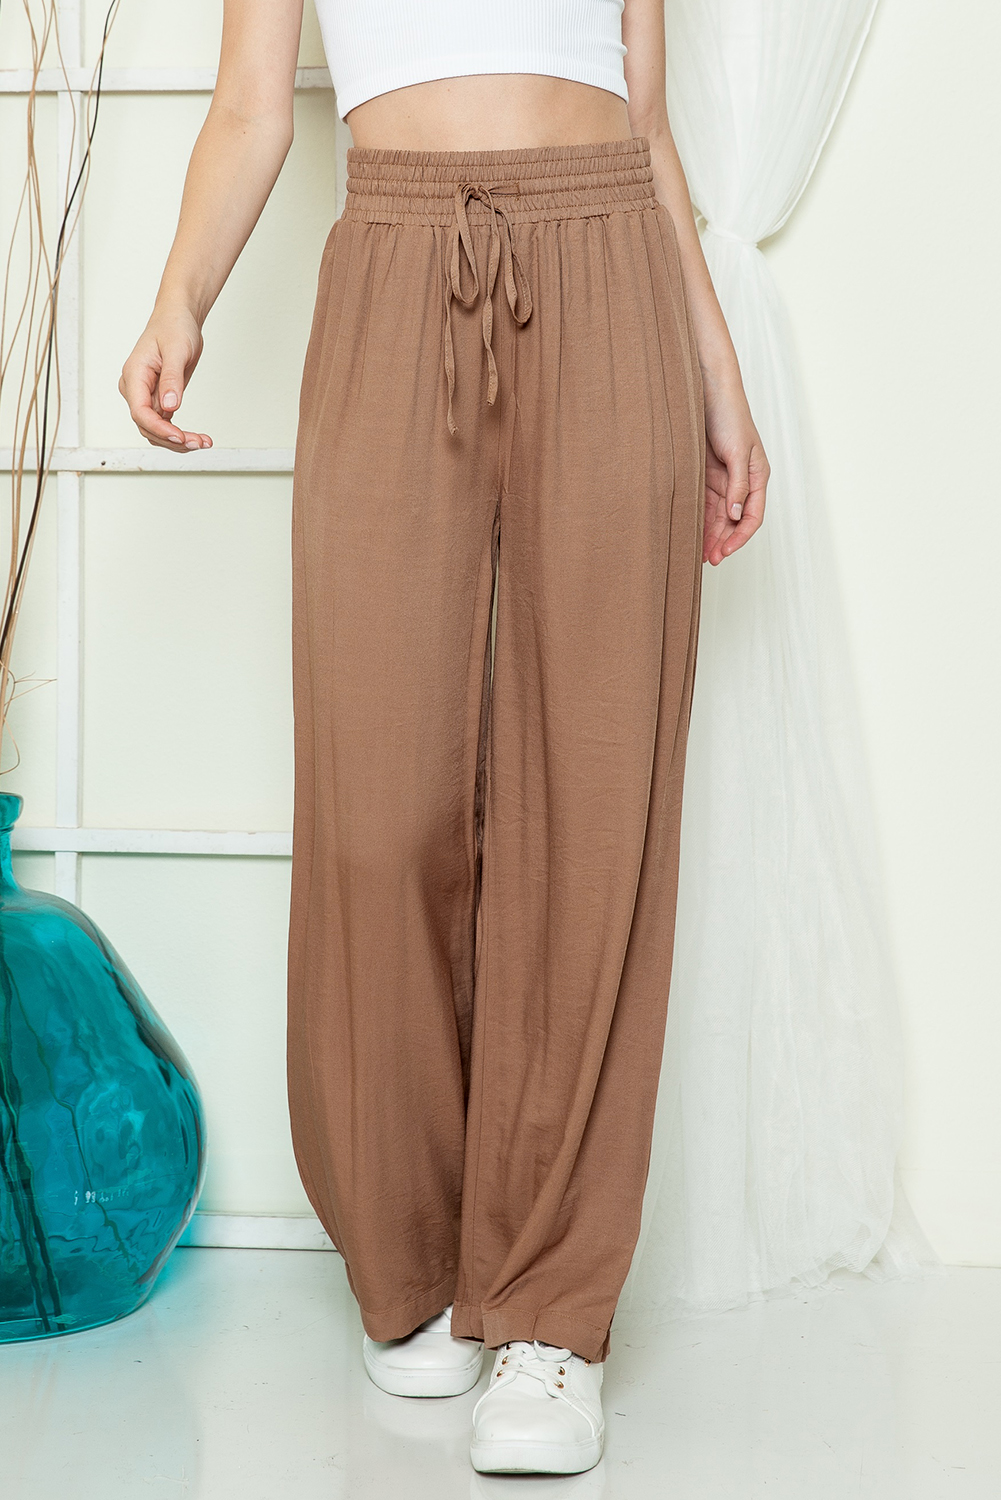 Shewin Wholesale Clothes Distributor Brown Casual Drawstring Shirred Elastic Waist Wide Leg PANTS